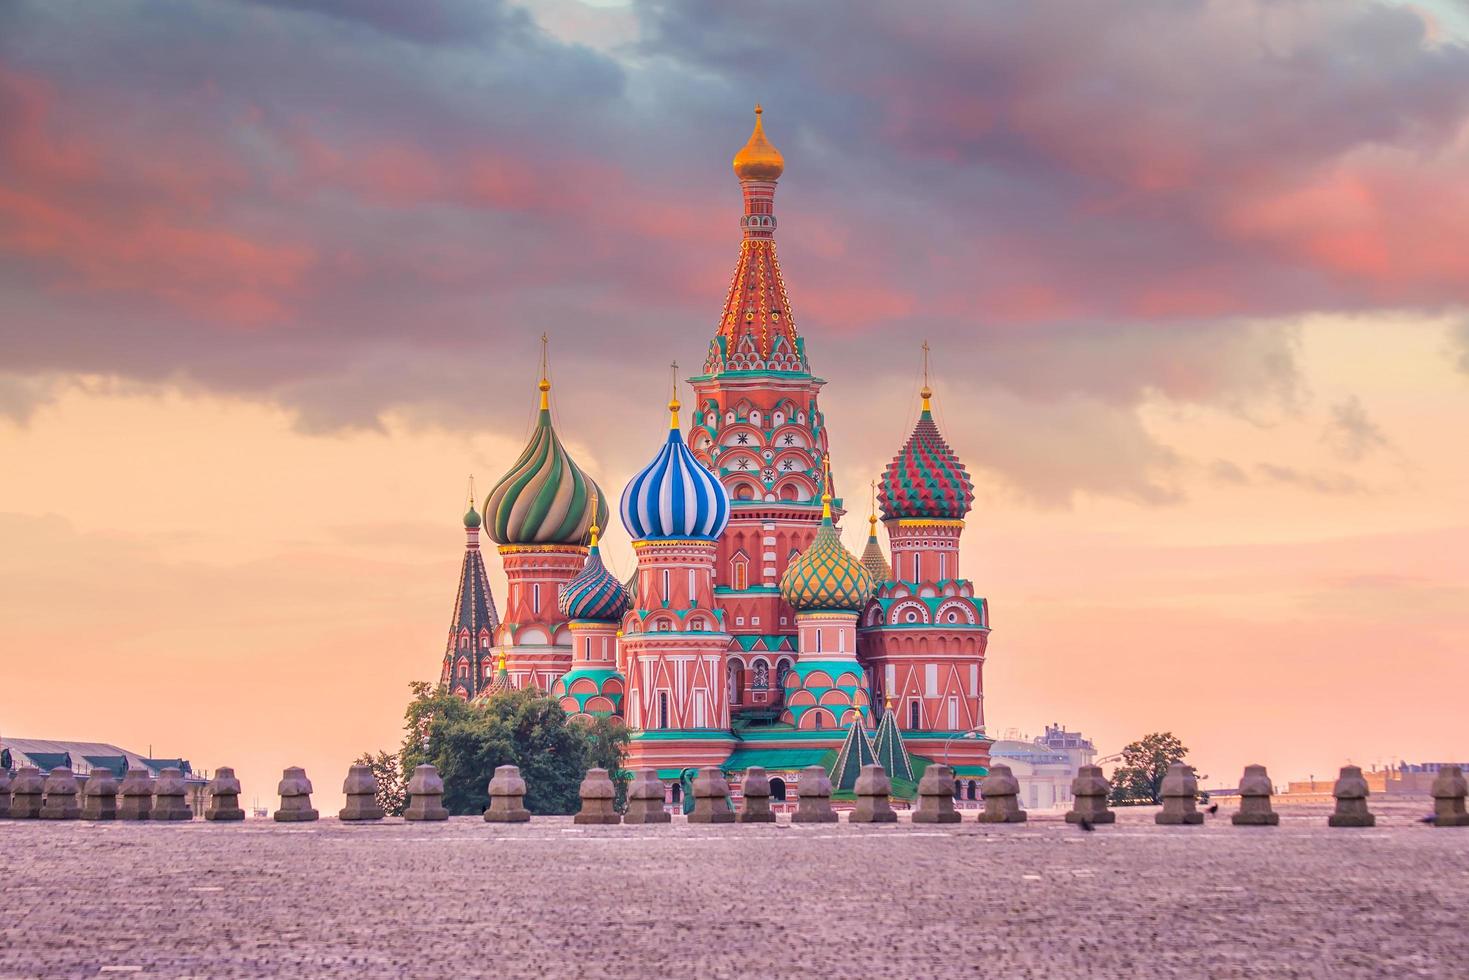 Basilikum Kathedrale am roten Platz in Moskau foto